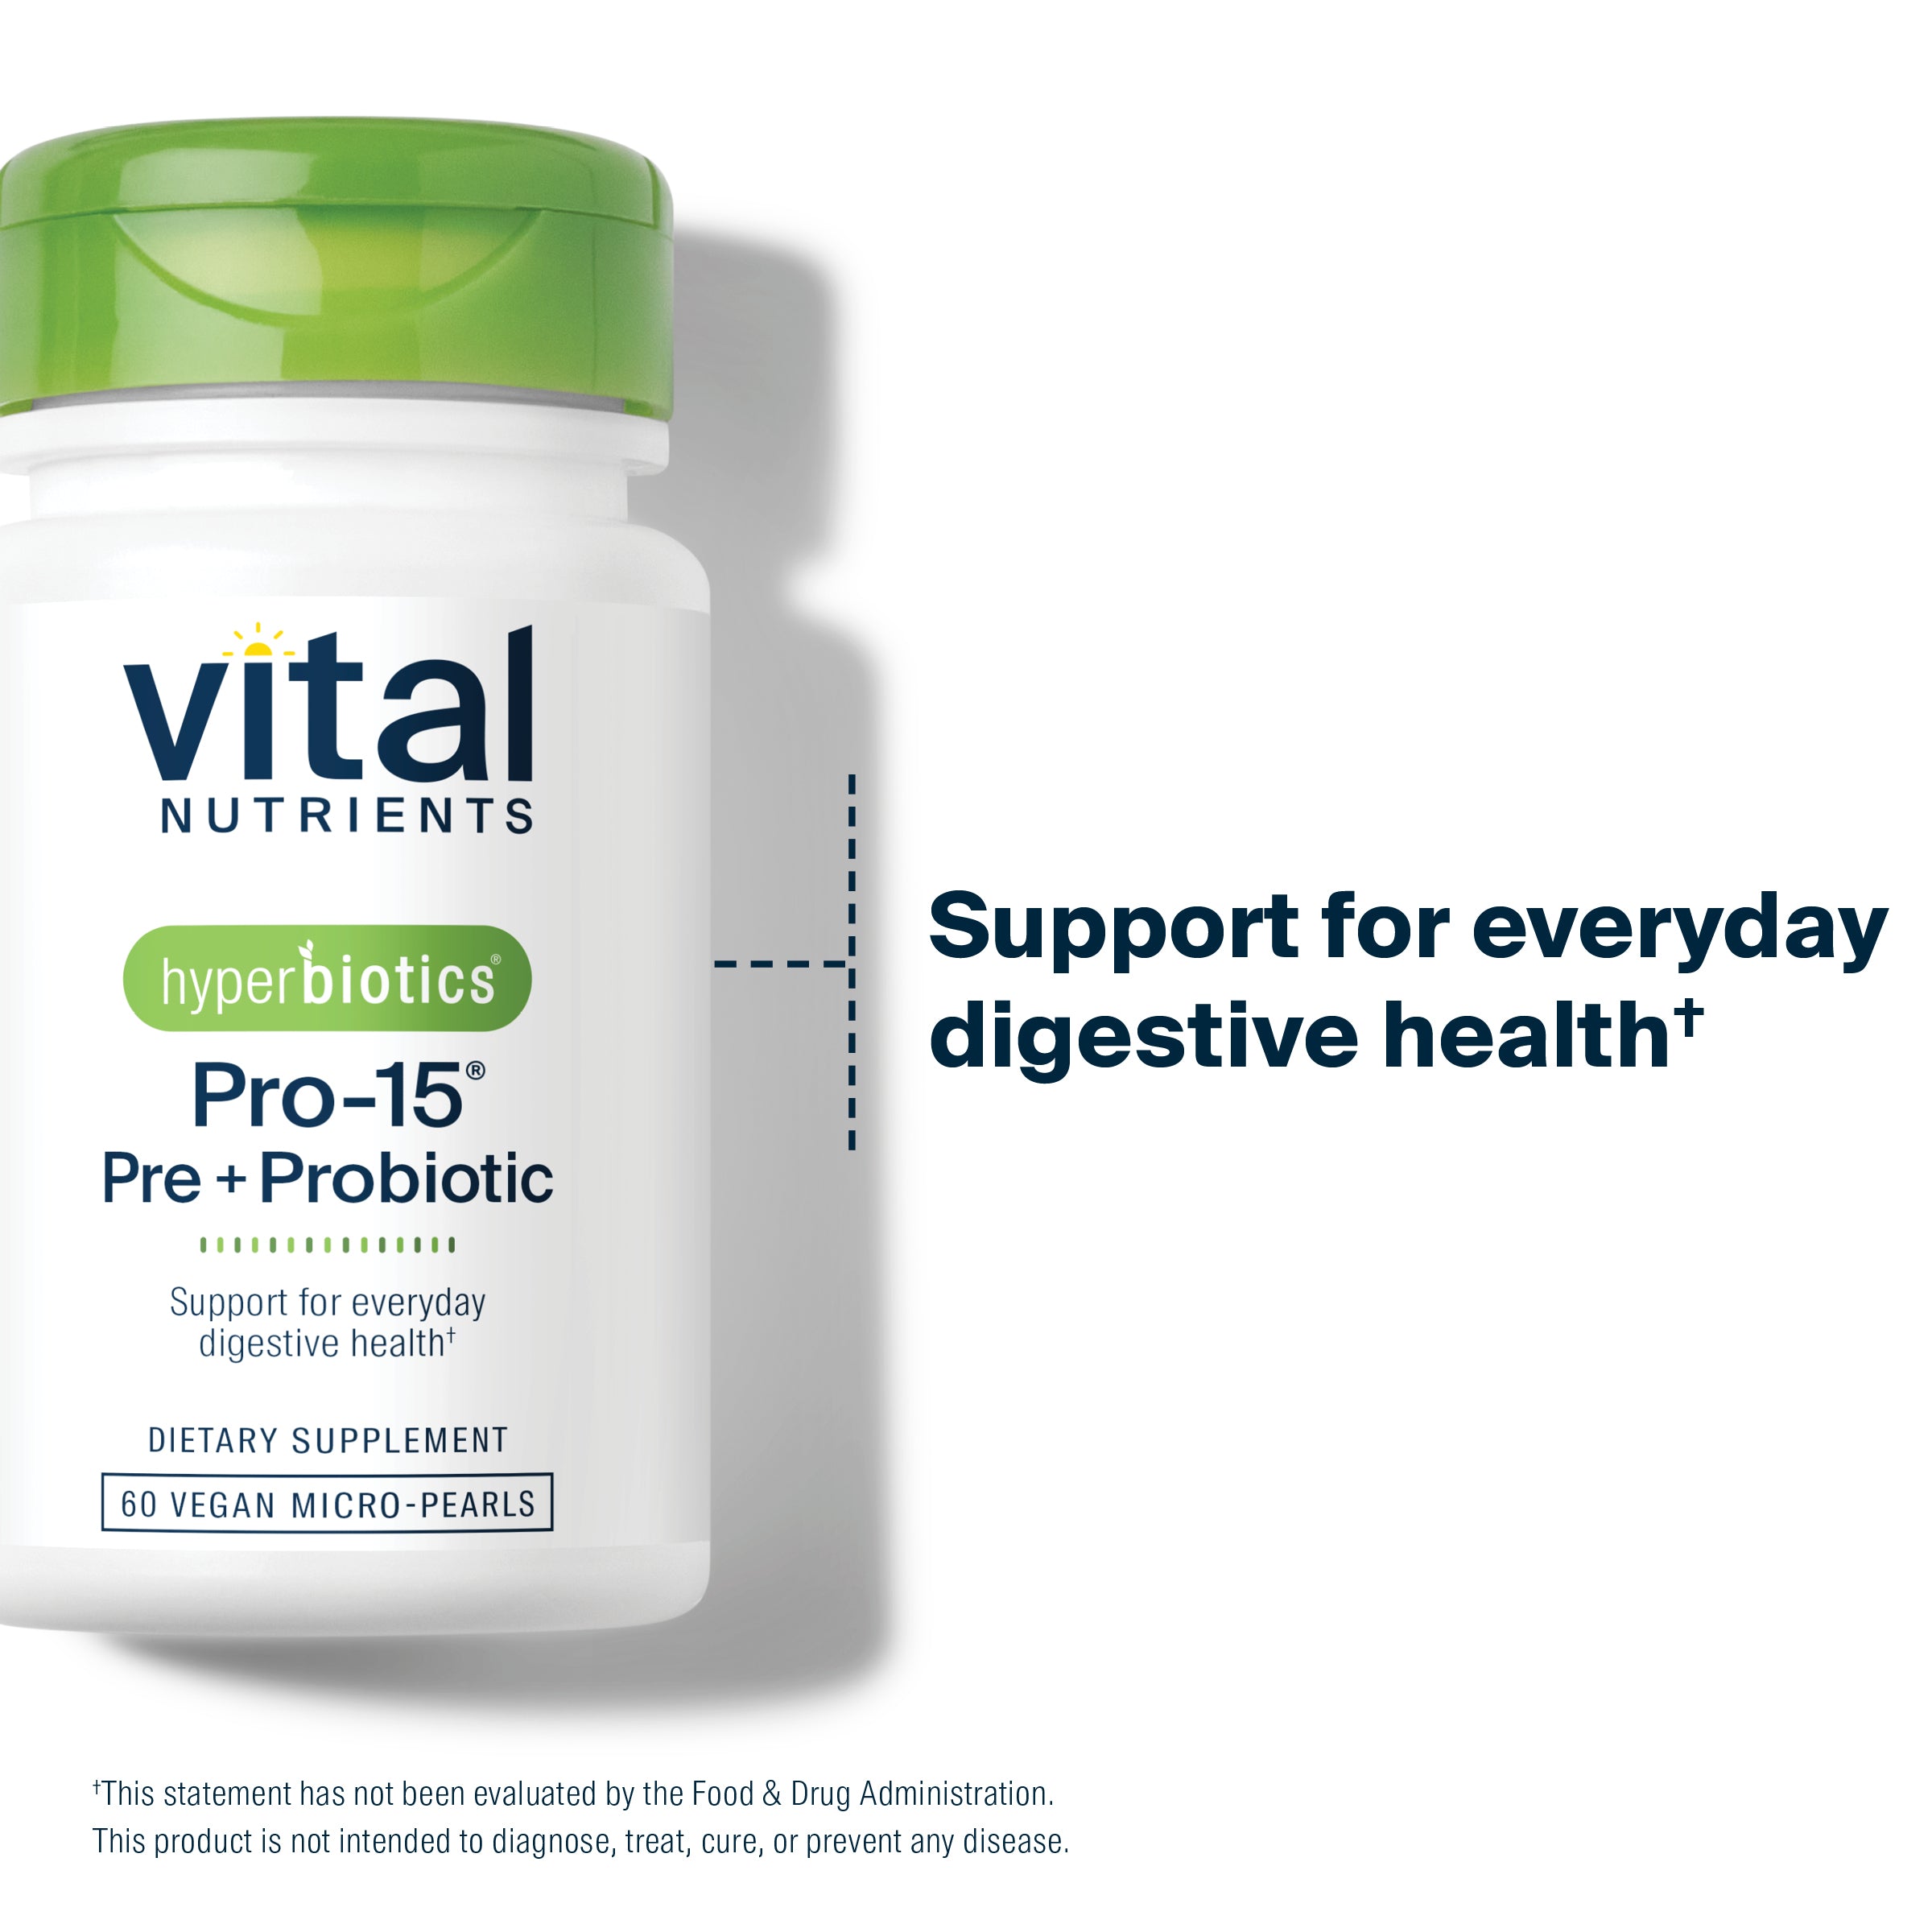 Hyperbiotics Pro-15 Pre+Probiotic 60 vegan micro-pearls support for everyday gut health.